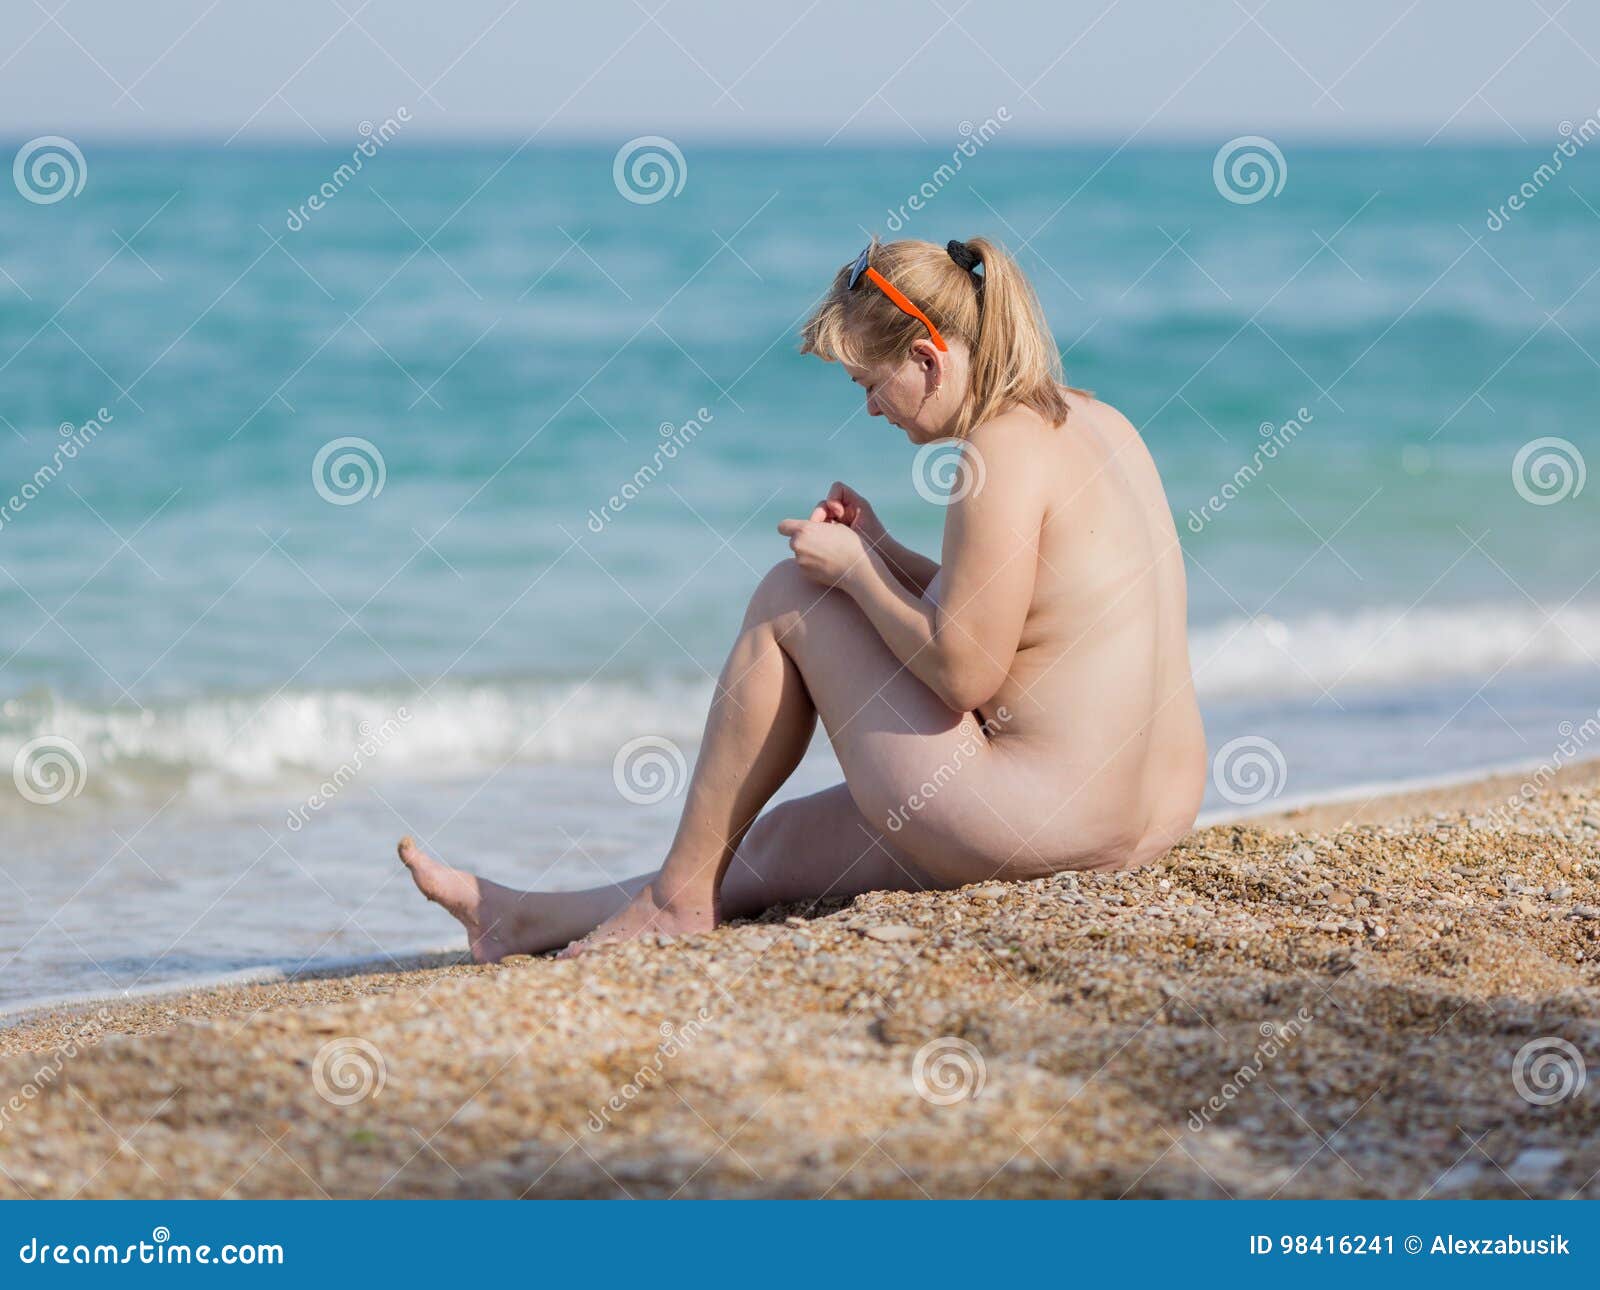 blonde beach naked nude sand sea